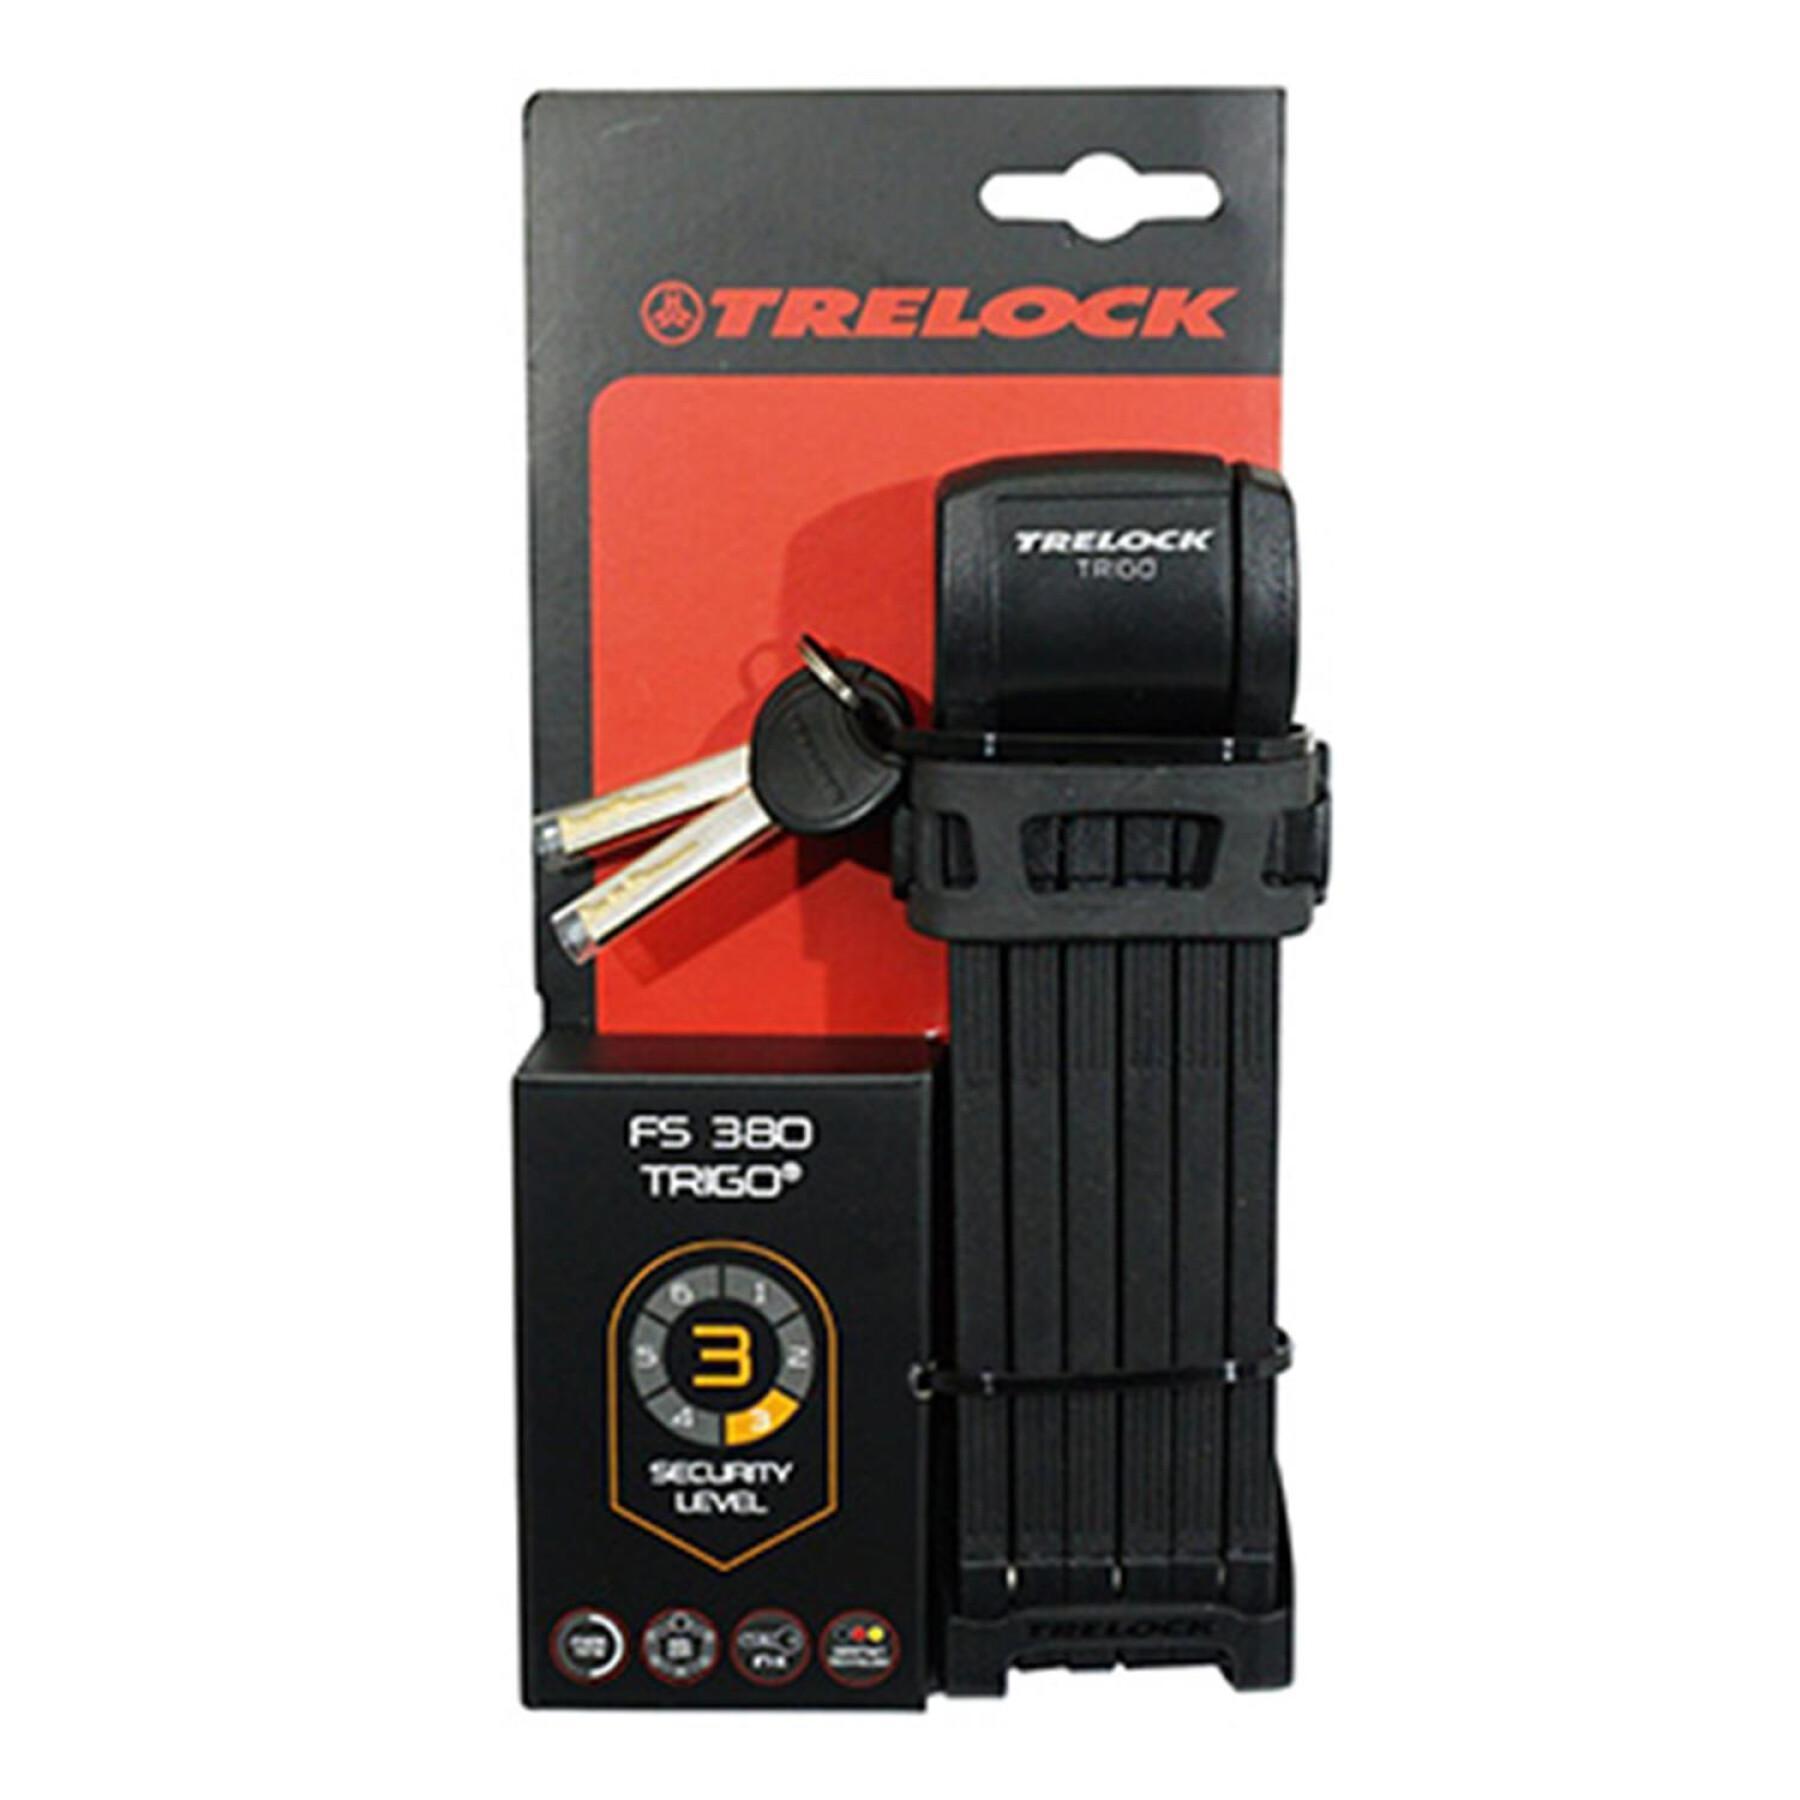 Cerradura plegable suave Trelock Trigo + support FS300 85 cm